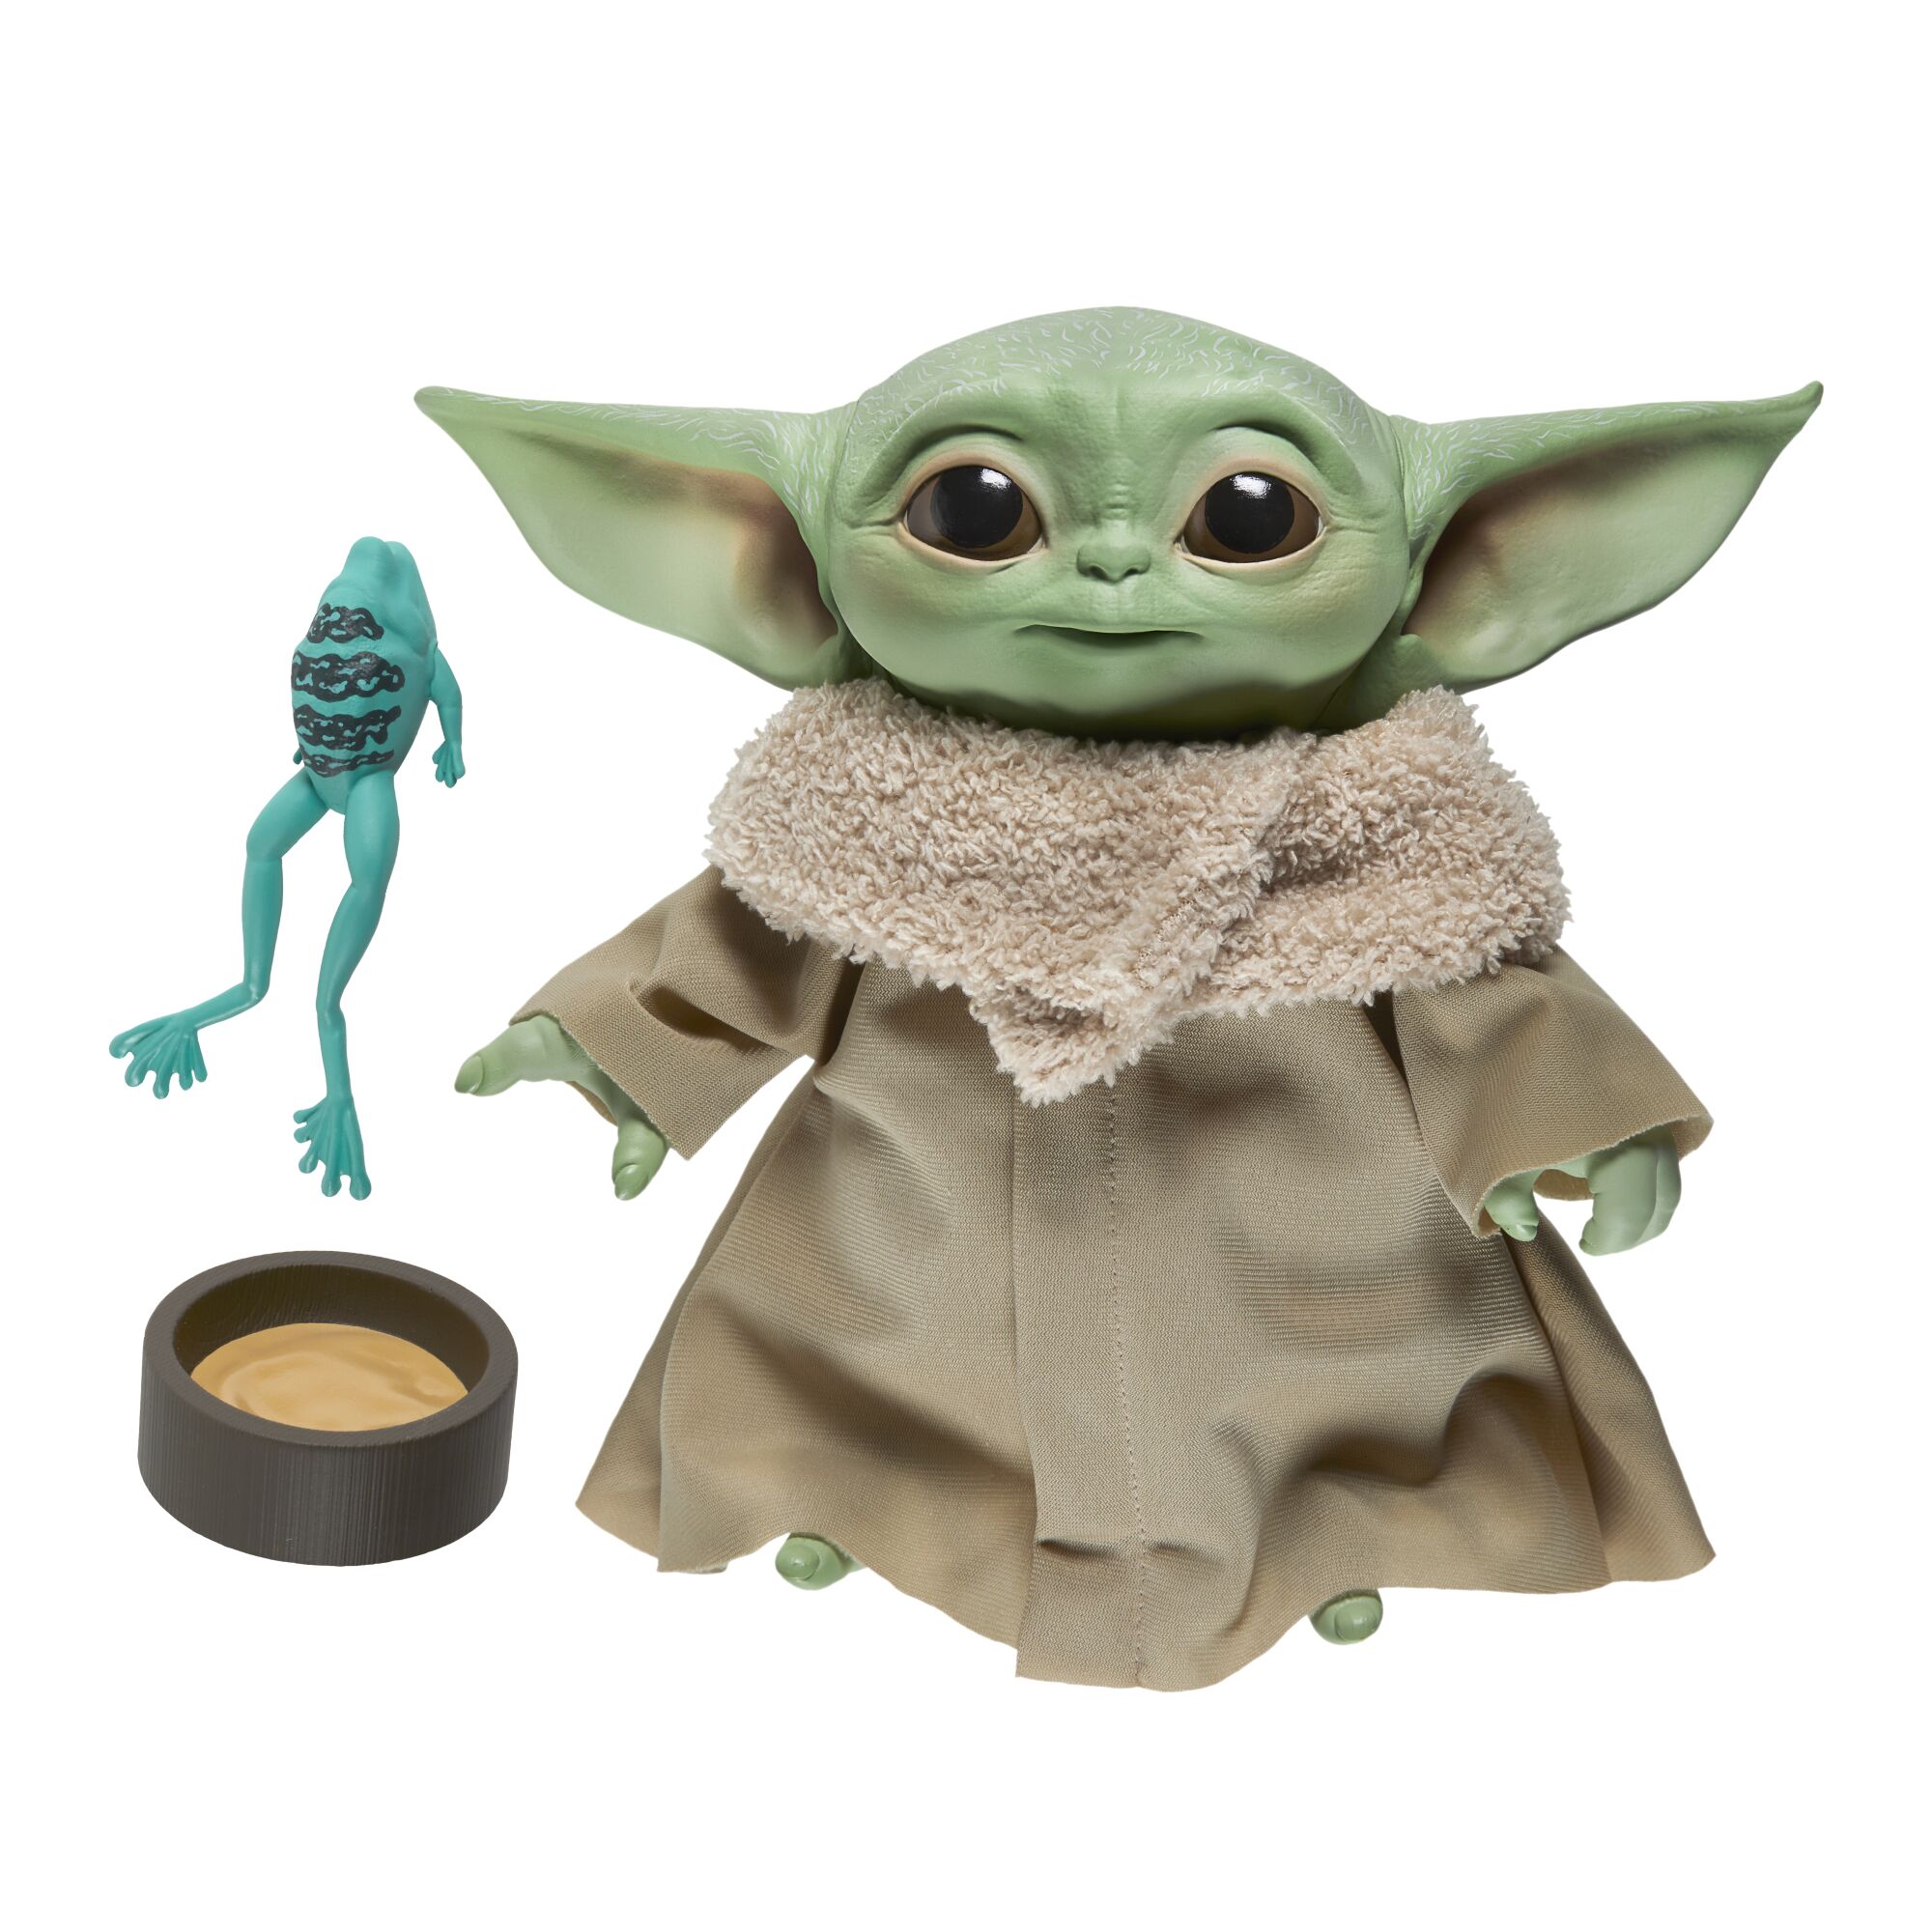 Star Wars, The Child talking plush toy.